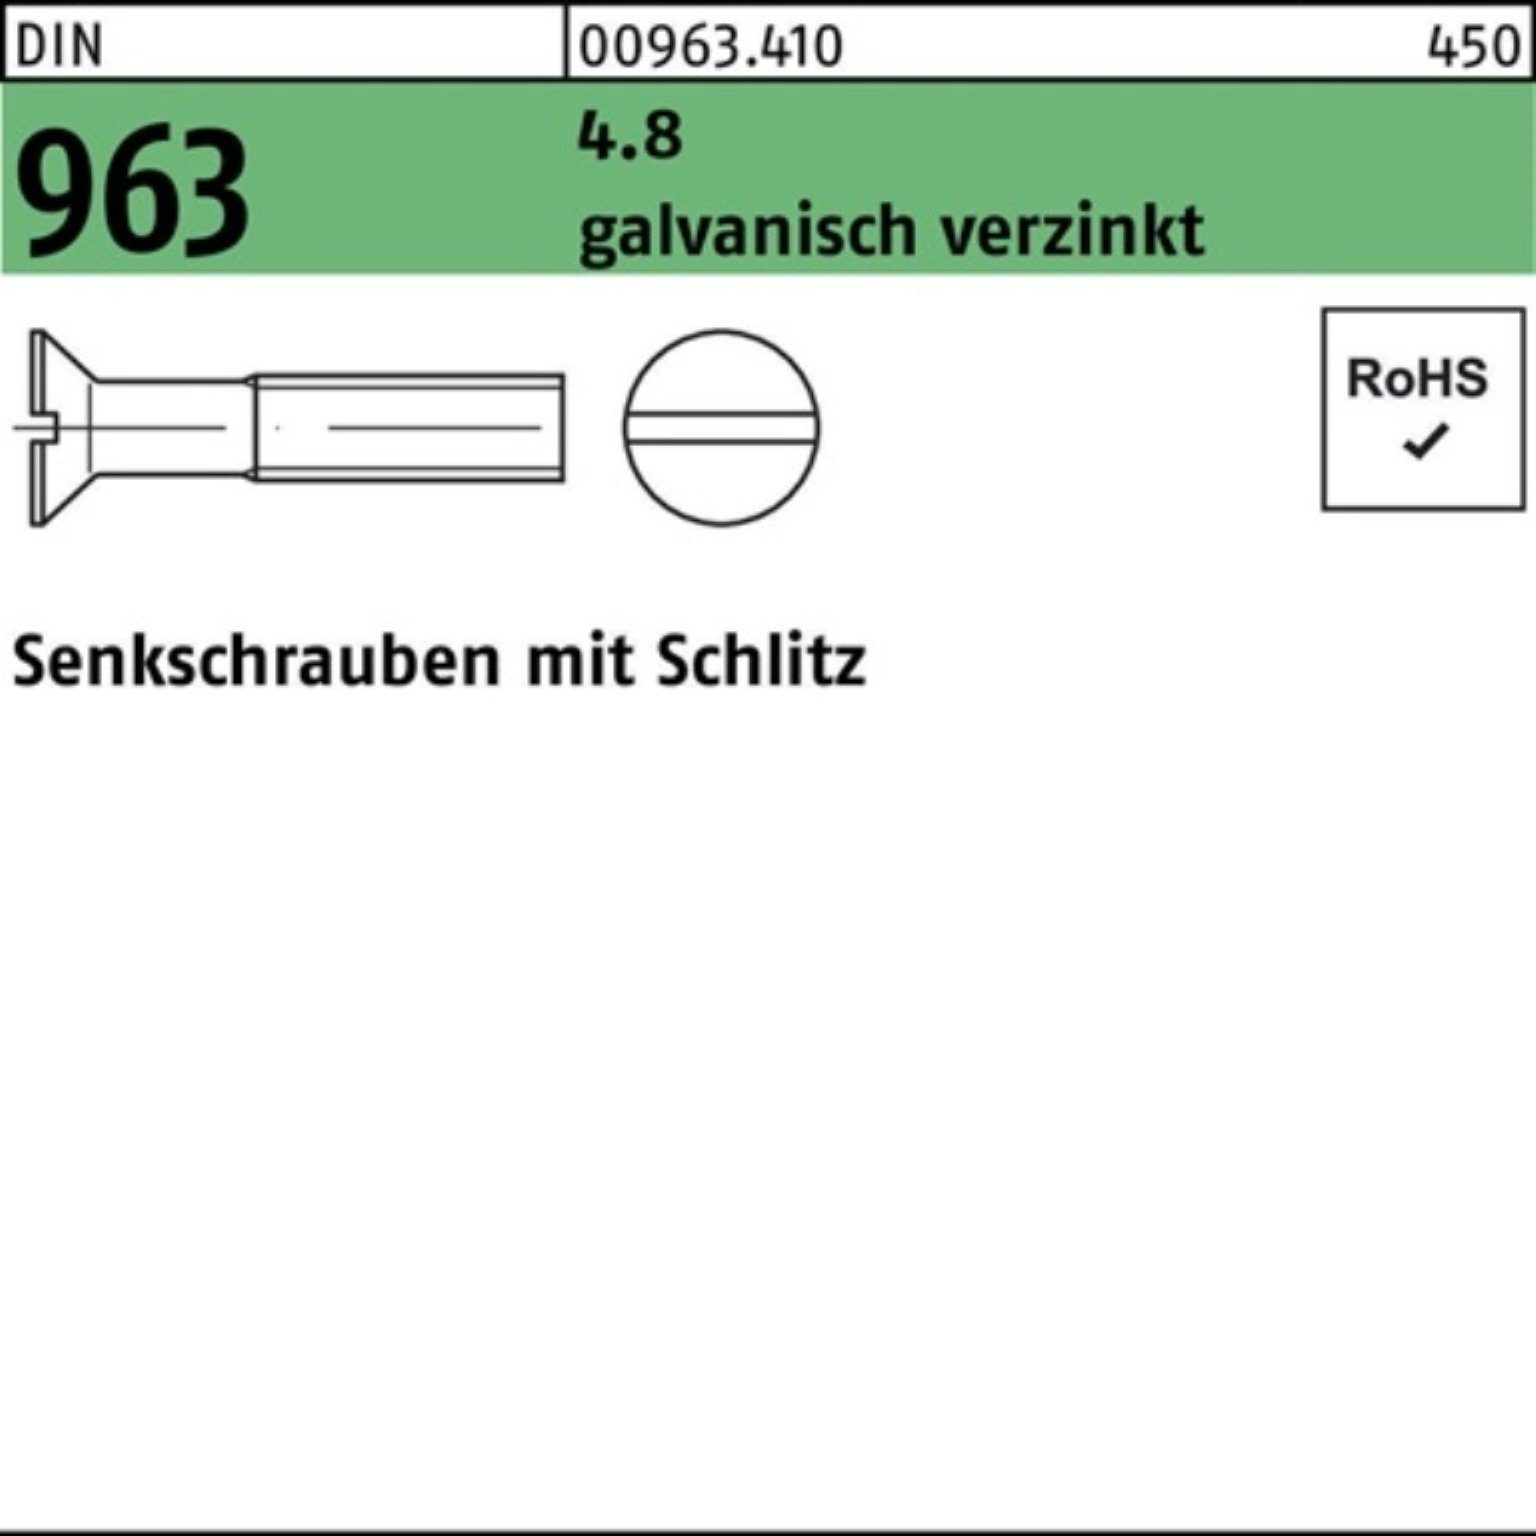 Reyher Senkschraube 100er Pack Senkschraube DIN 963 Schlitz M16x 45 4.8 galv.verz. 50 Stü